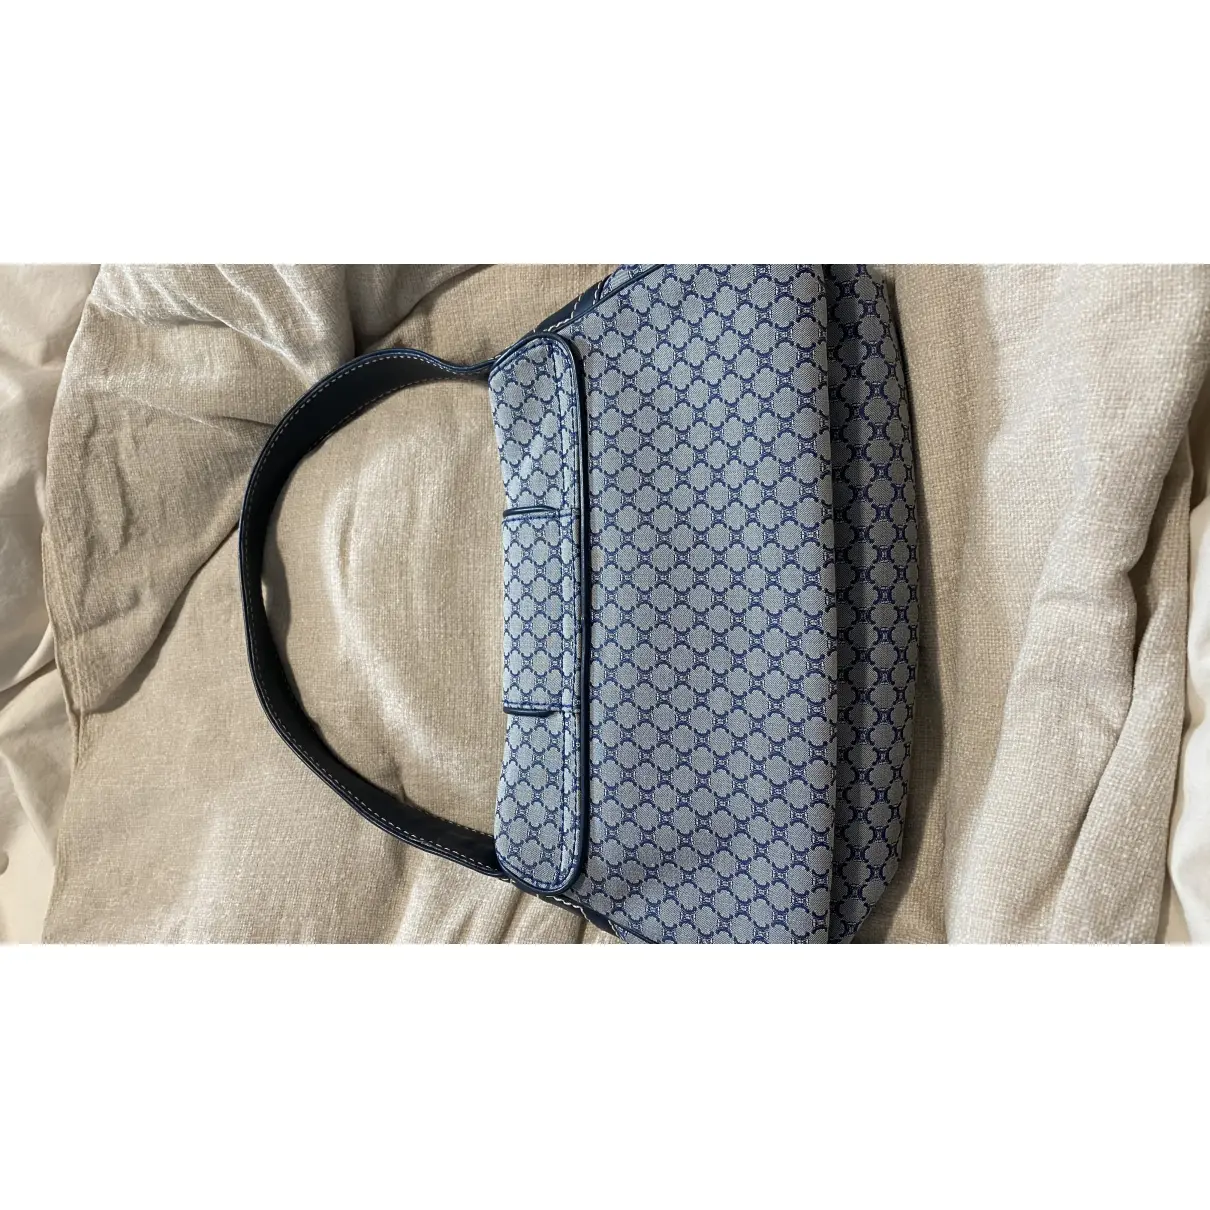 Buy Celine Ava cloth handbag online - Vintage